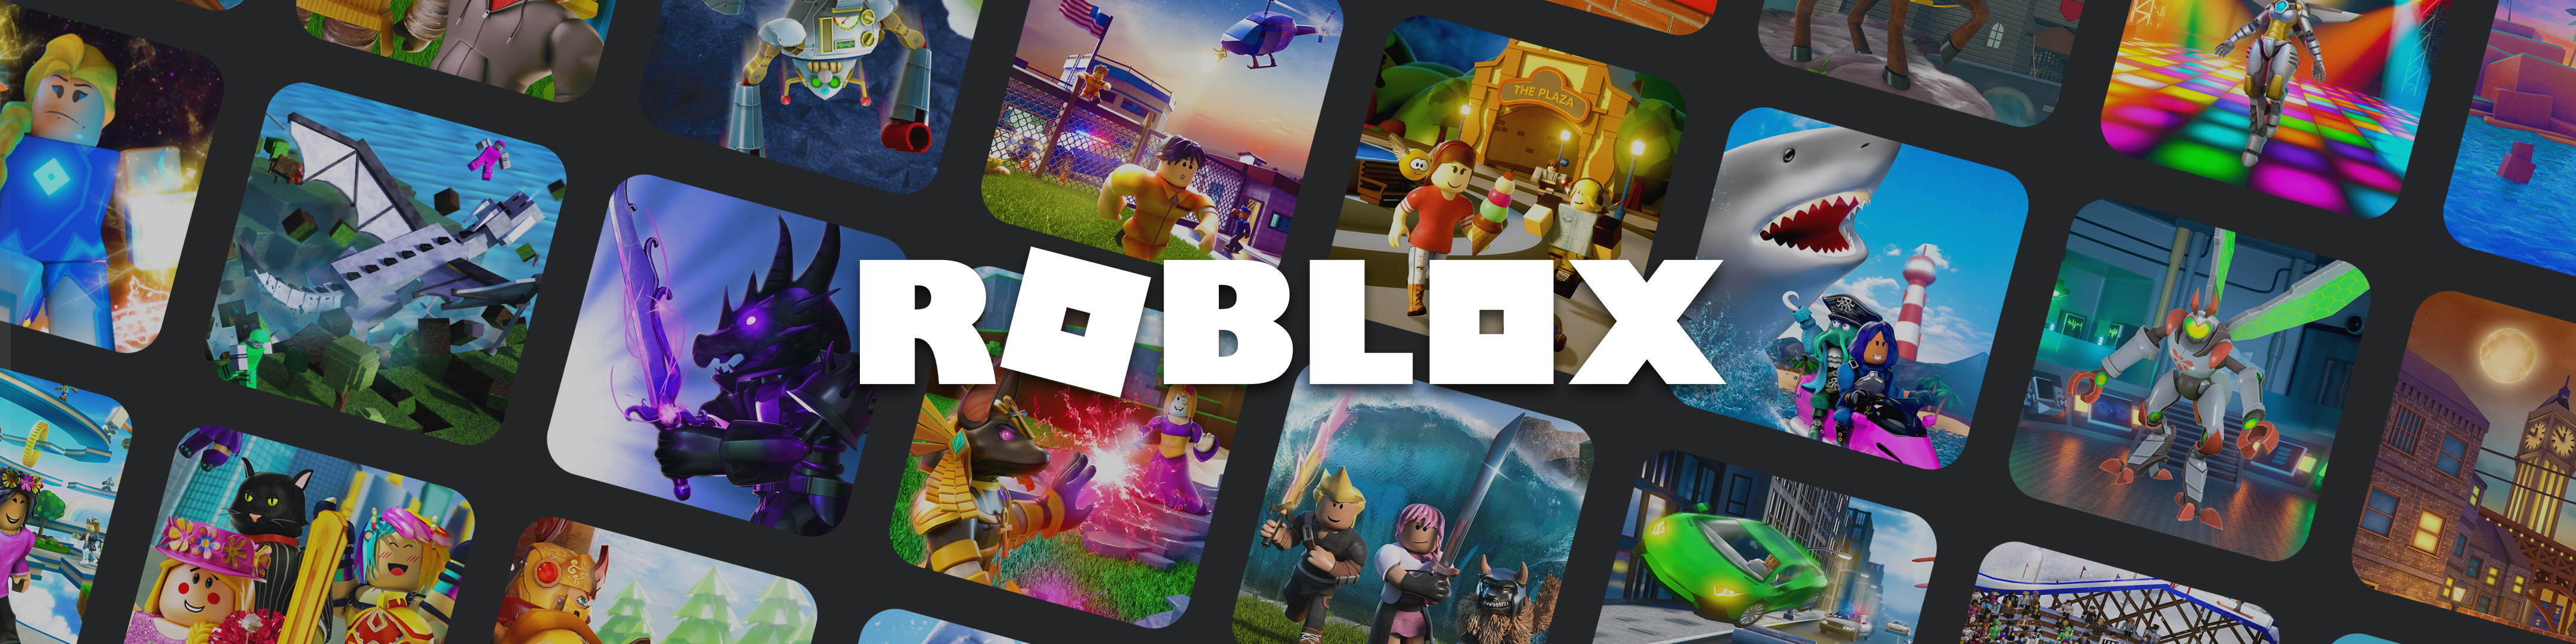 Roblox On The App Store - roblox studio icon blurrylow quality bug studio bugs